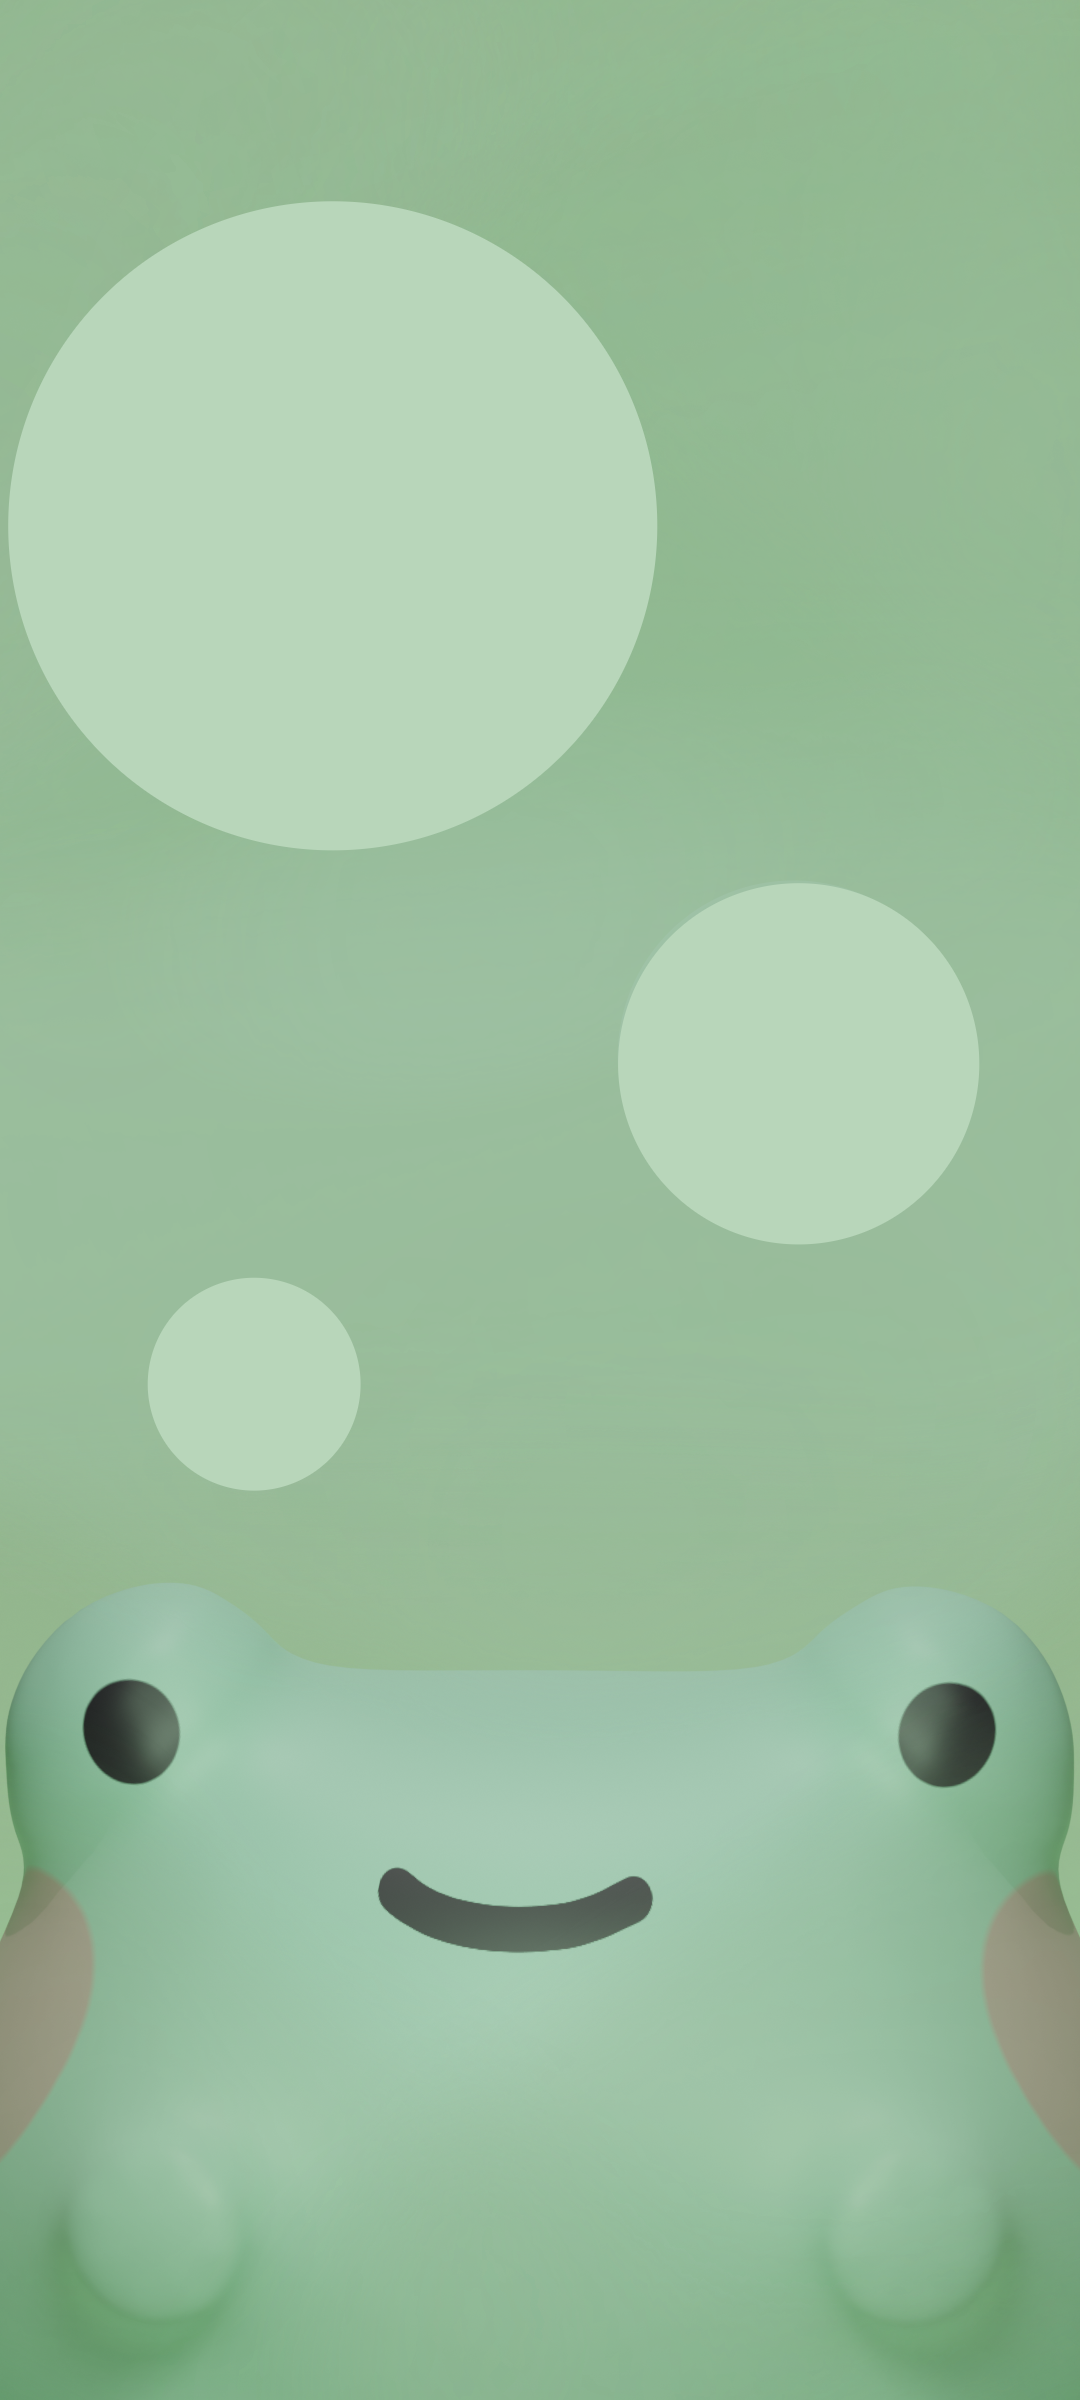 kawaii frog wallpaper by Lenoz0 on DeviantArt